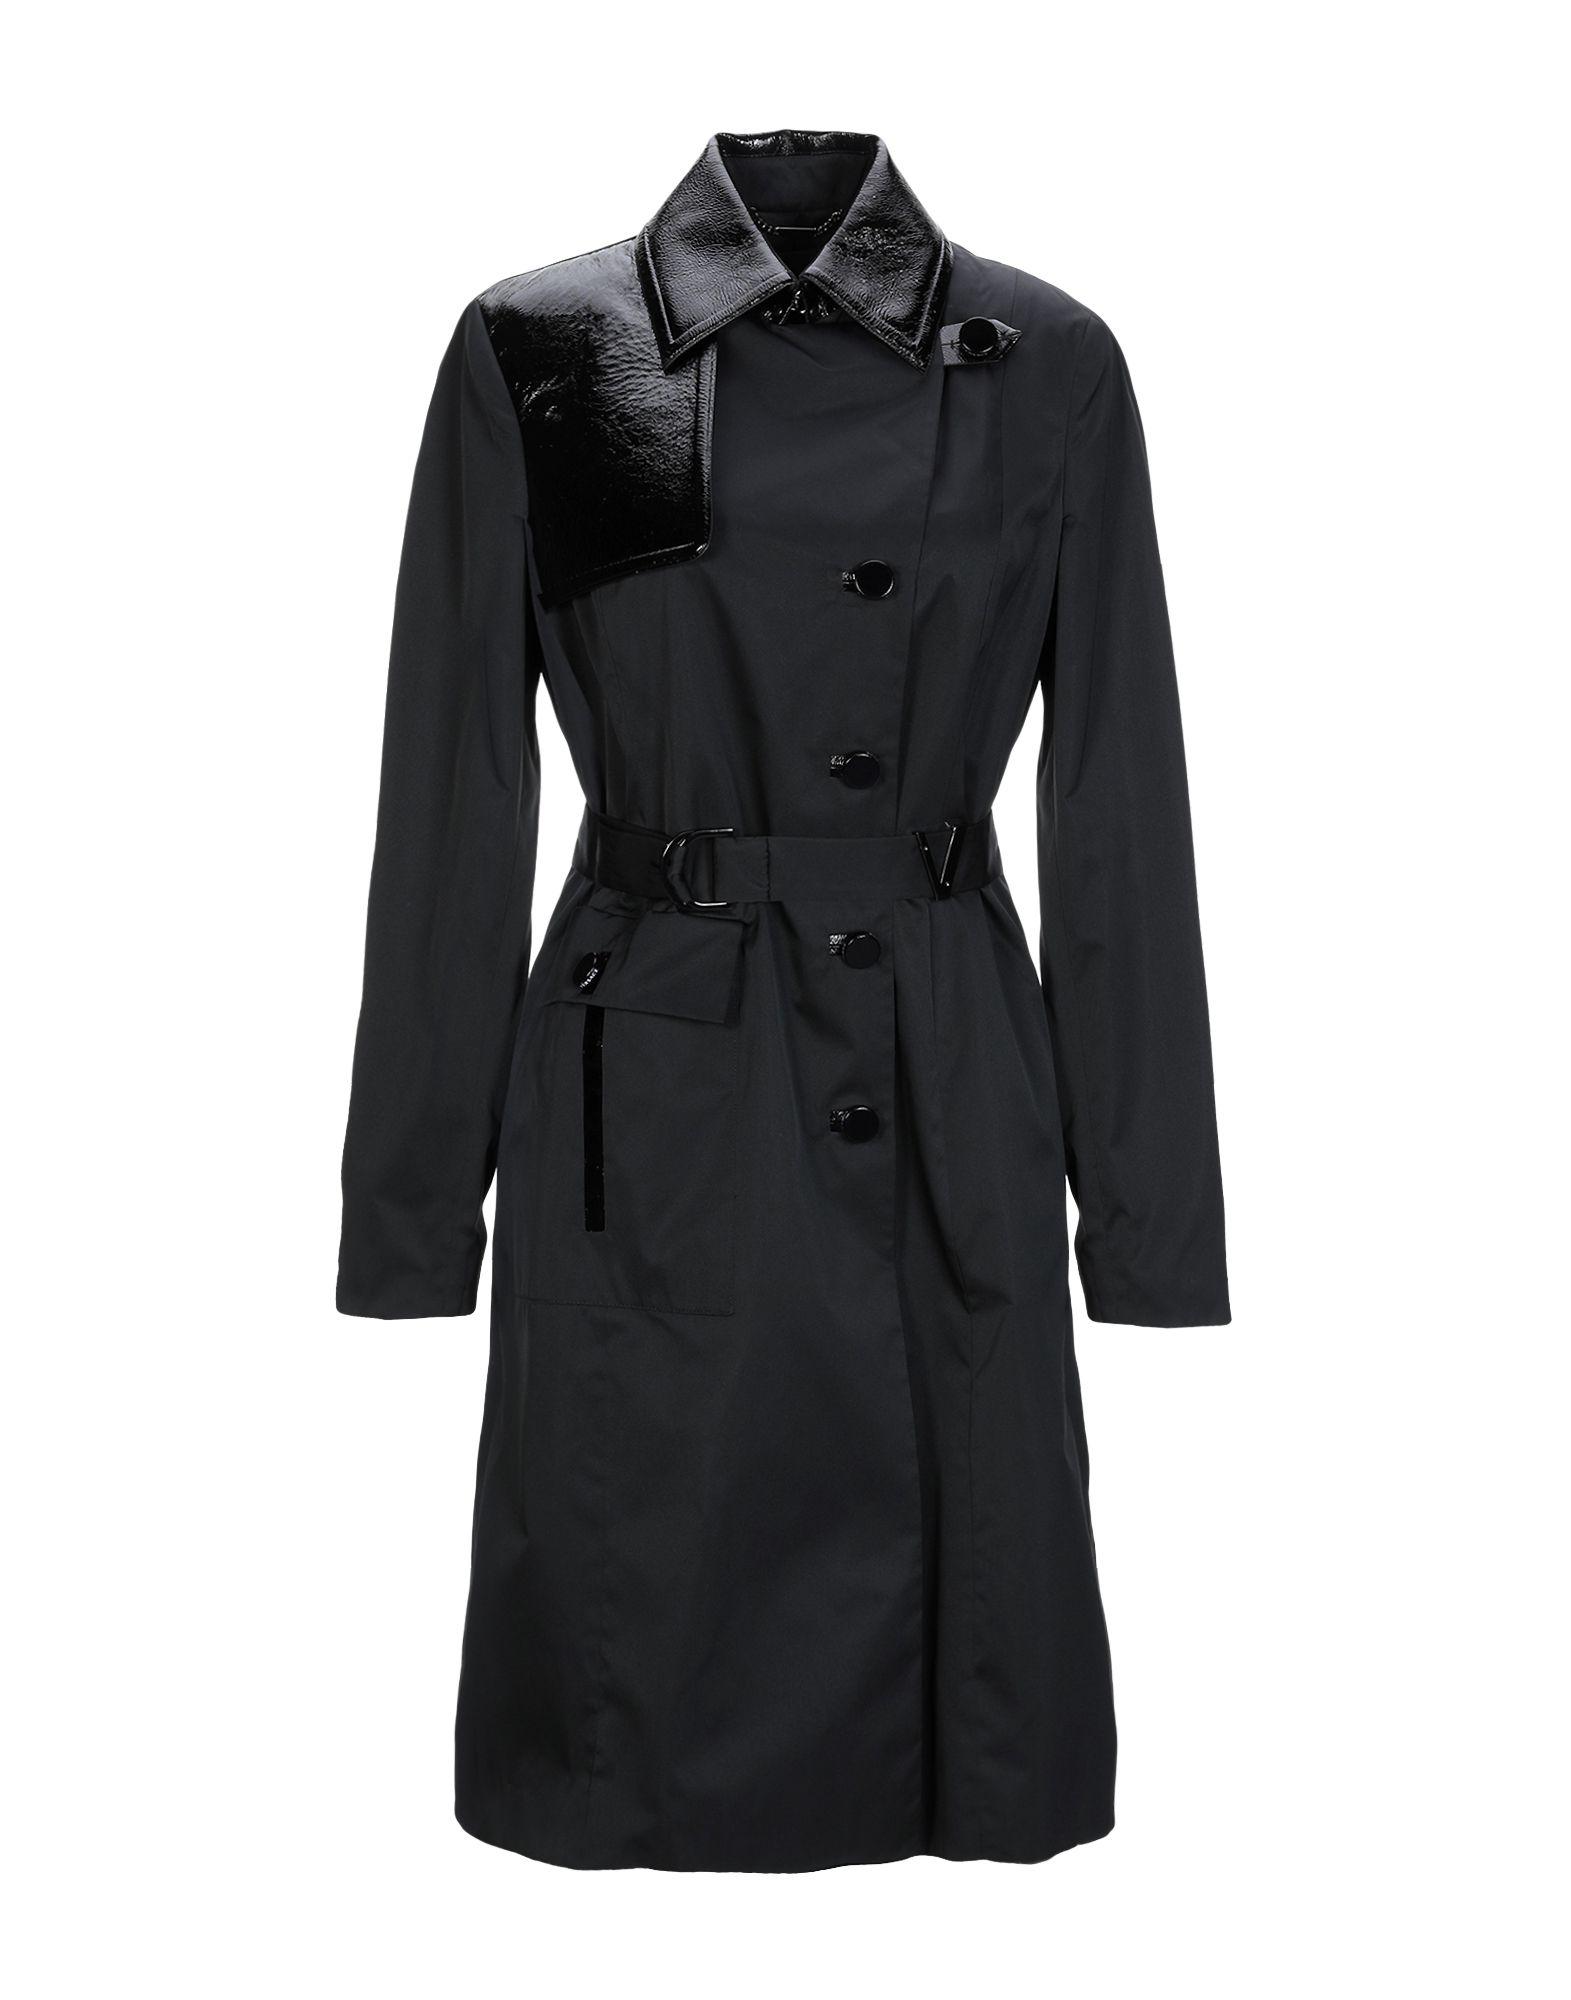 Versace Leather Overcoat in Black - Lyst